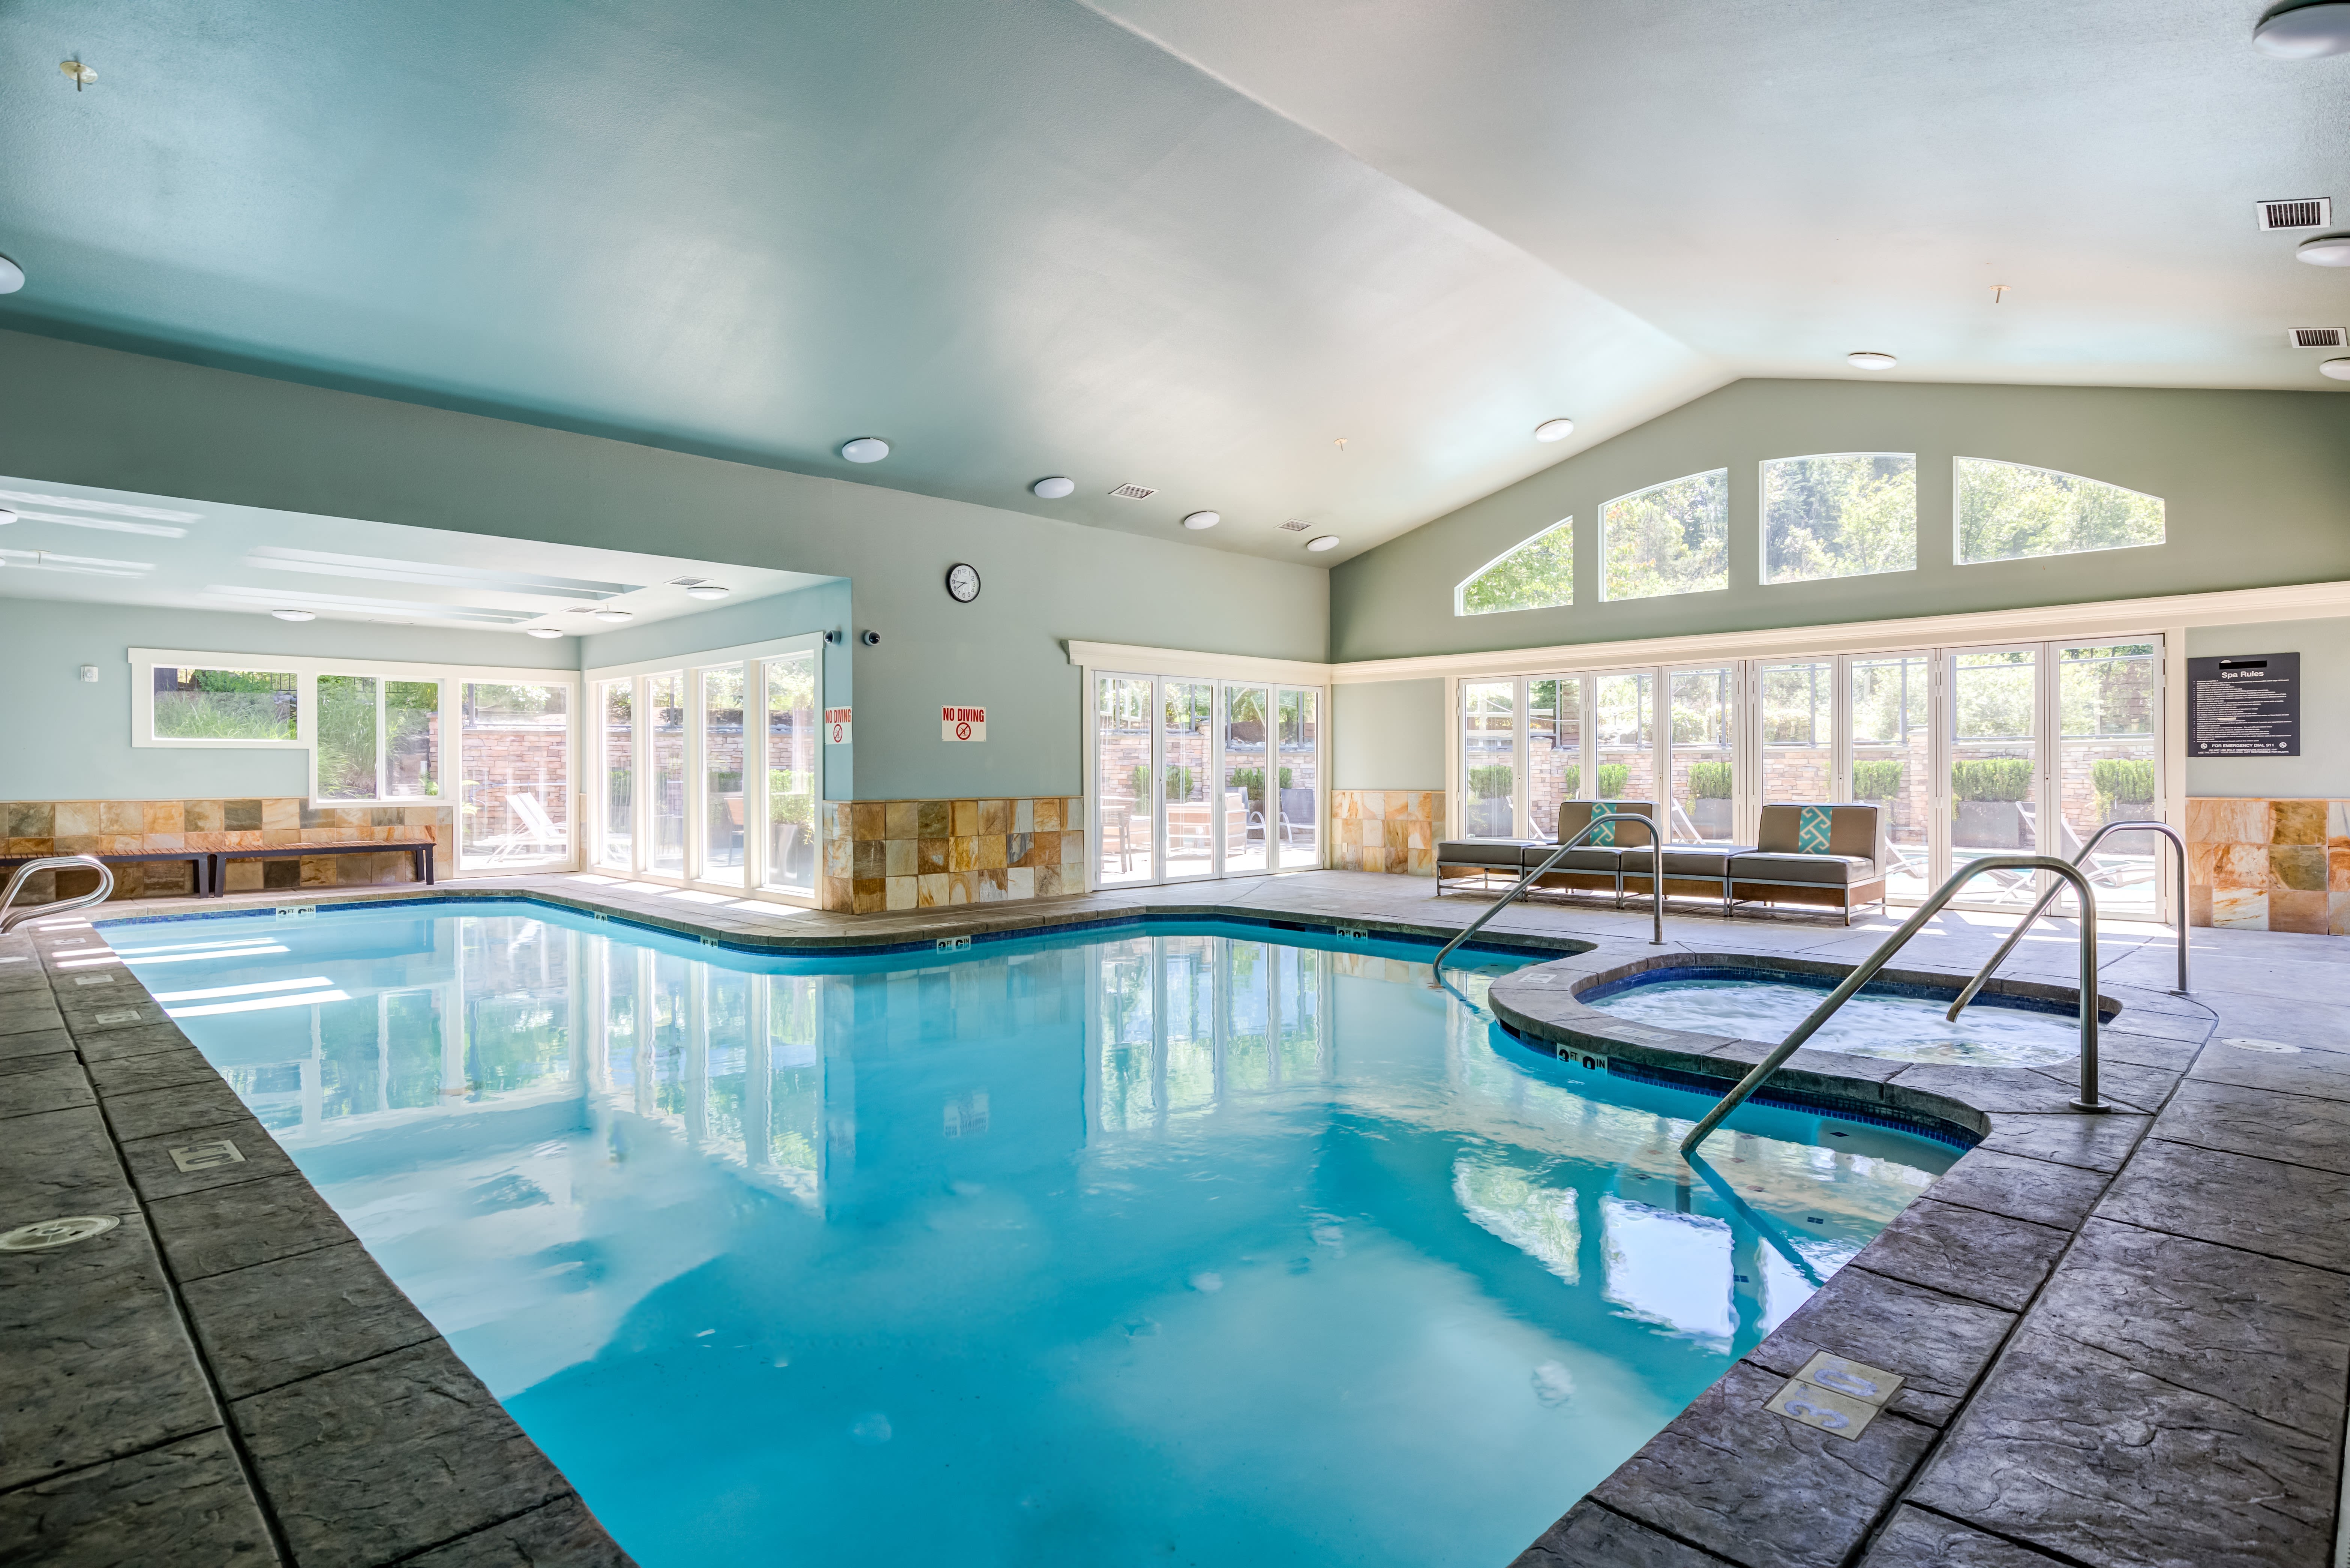 Enjoy an indoor pool at The Preserve at Forbes Creek in Kirkland, Washington